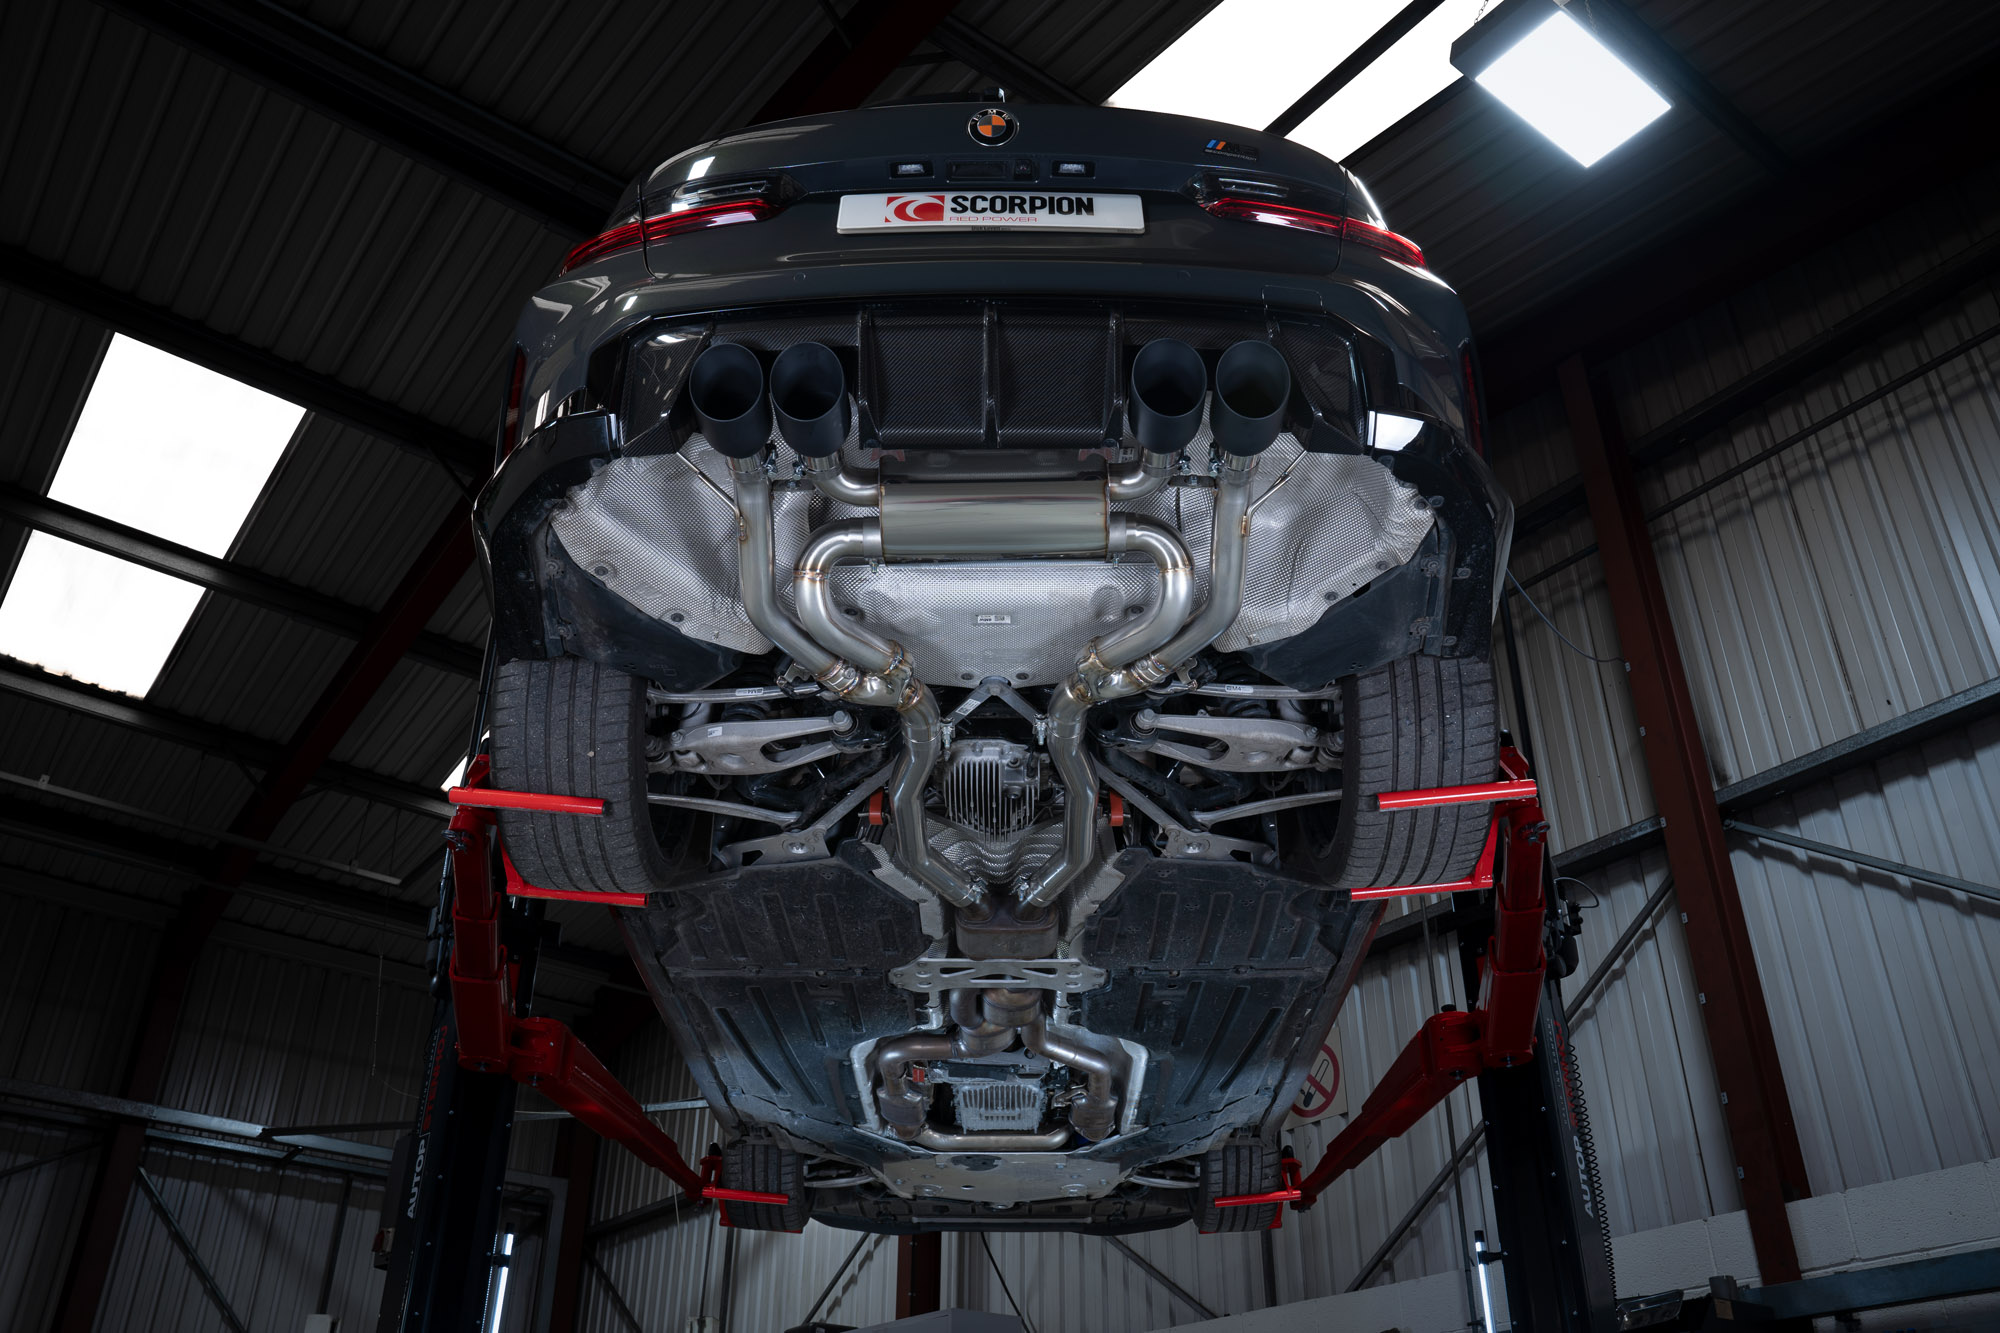 Scorpion Exhausts Half-System for G81 M3 Touring. Ceramic Daytona Trims.